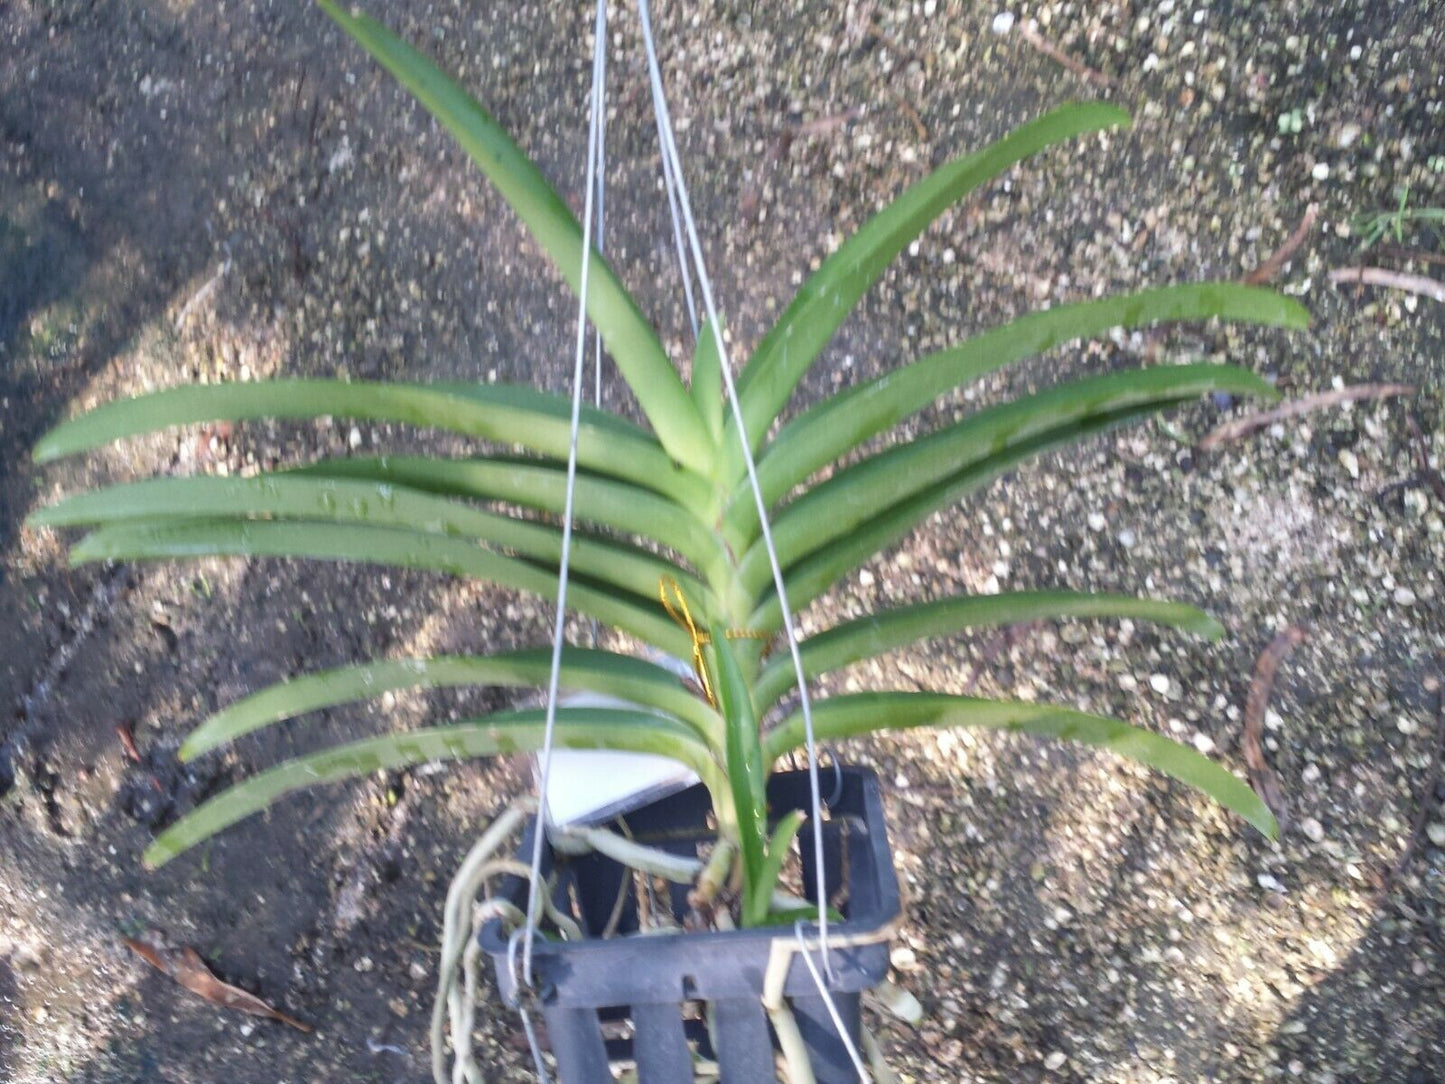 Vanda Arthorn Tropical Hanging Plants